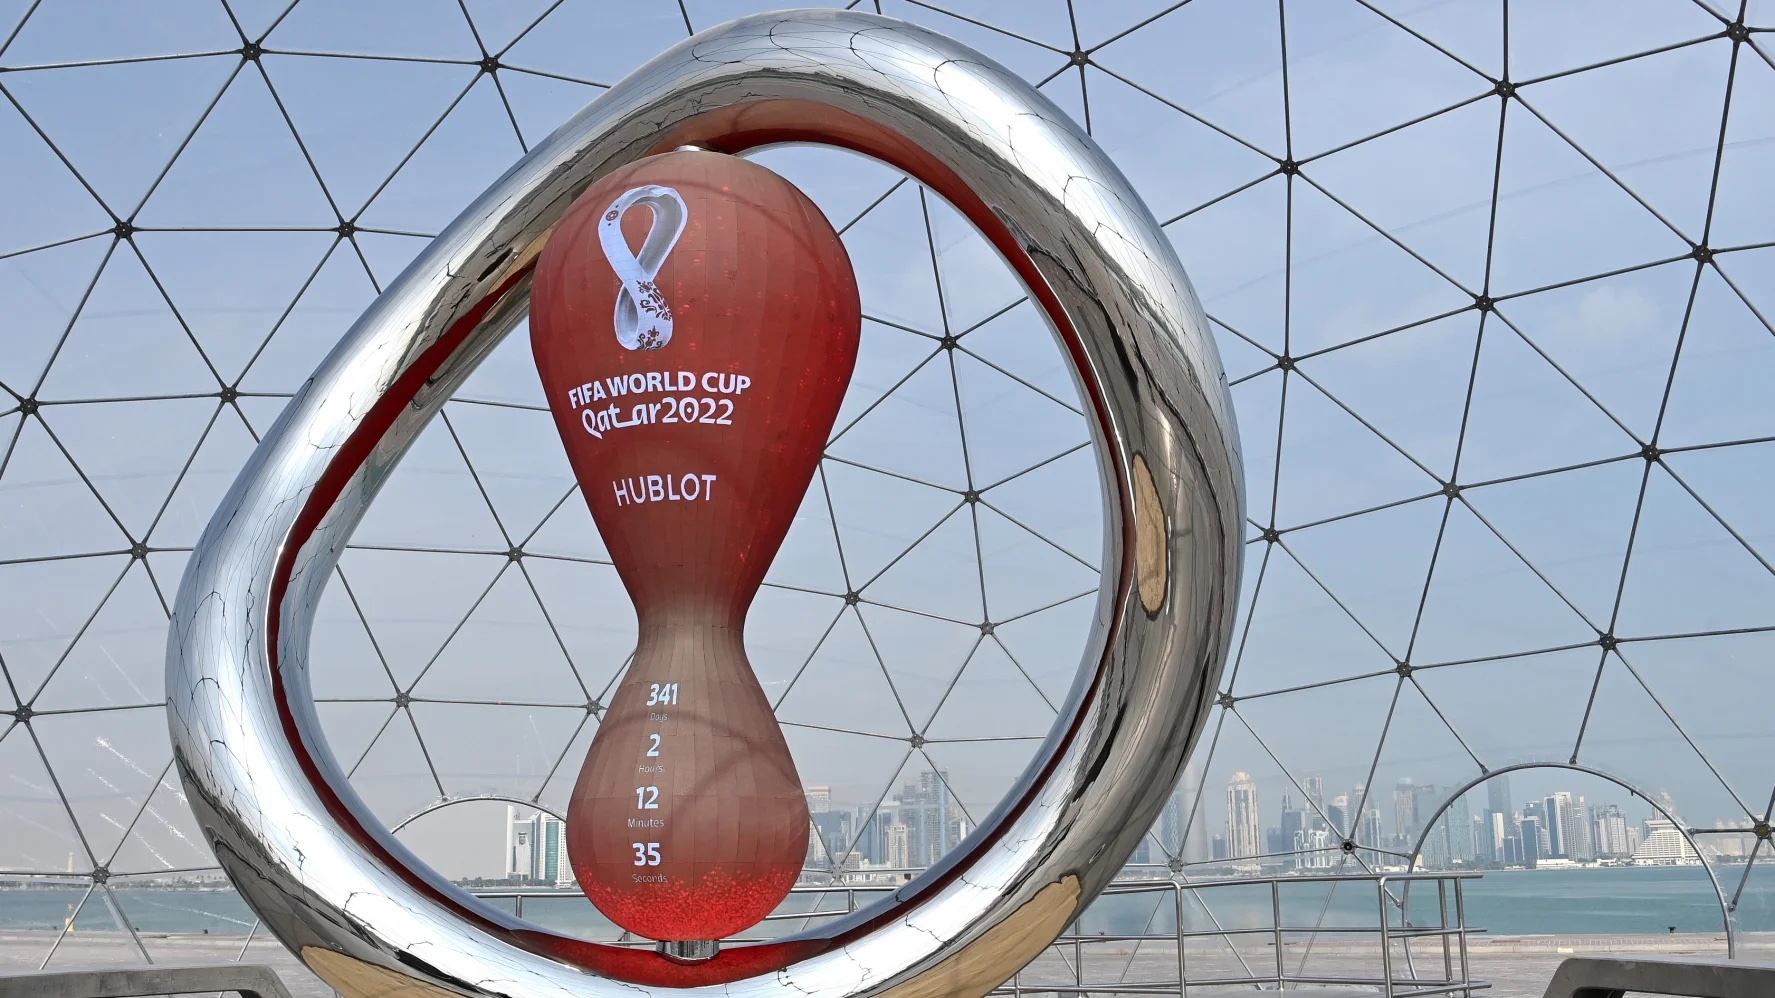 fifa cong bo linh vat world cup 2022 2 copy